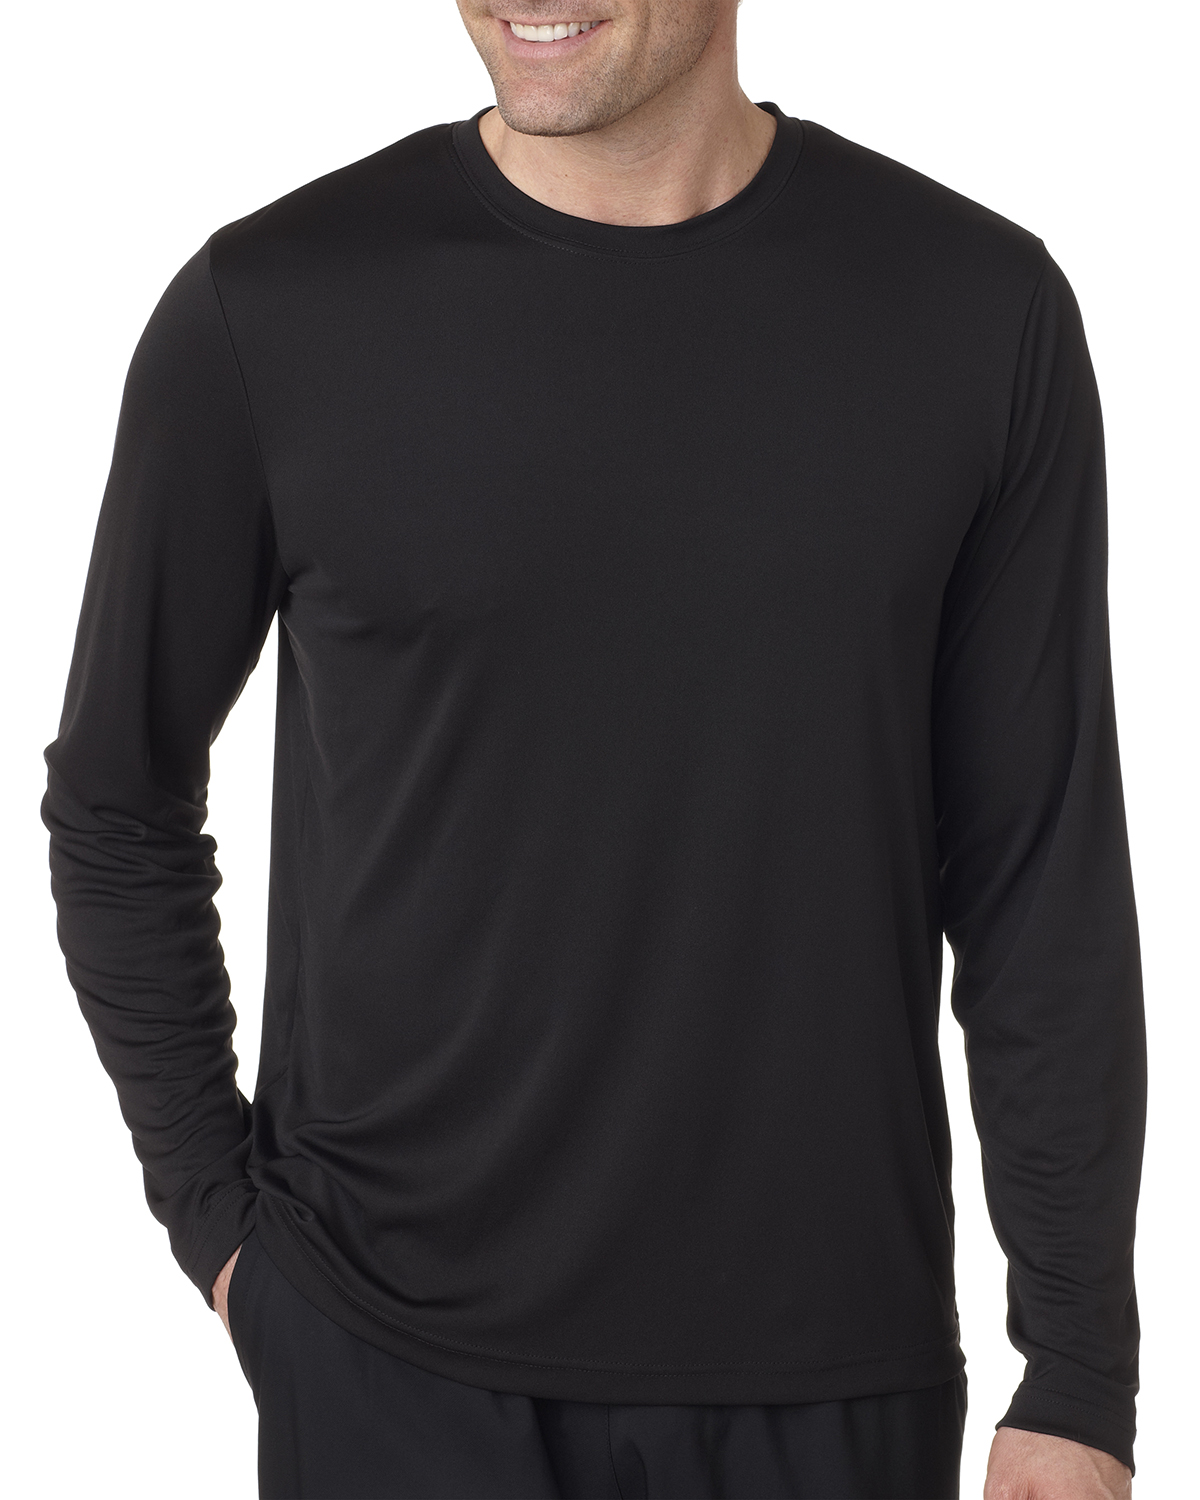 Hanes 482L - Adult Cool DRI Long-Sleeve Performance T-Shirt